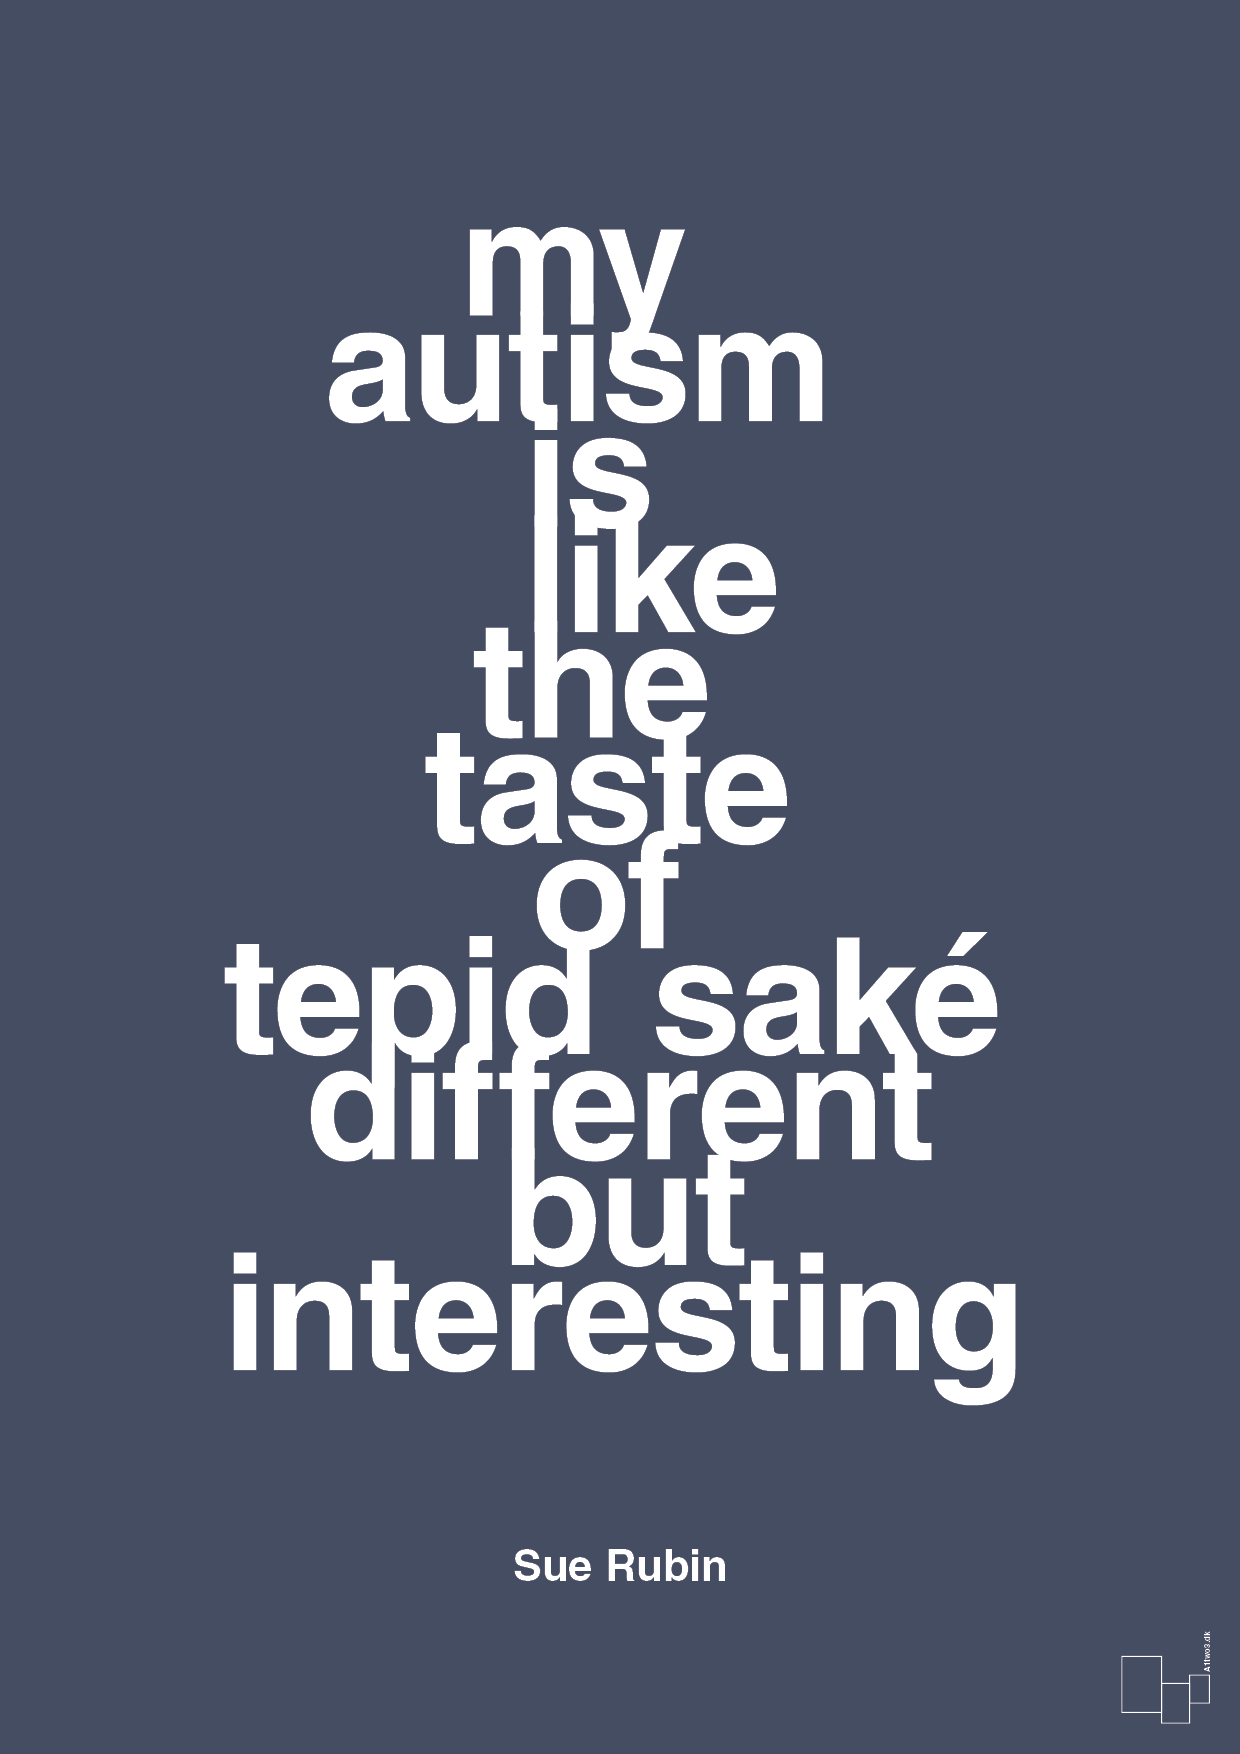 my autism is like the taste of tepid saké different but interesting - Plakat med Samfund i Petrol